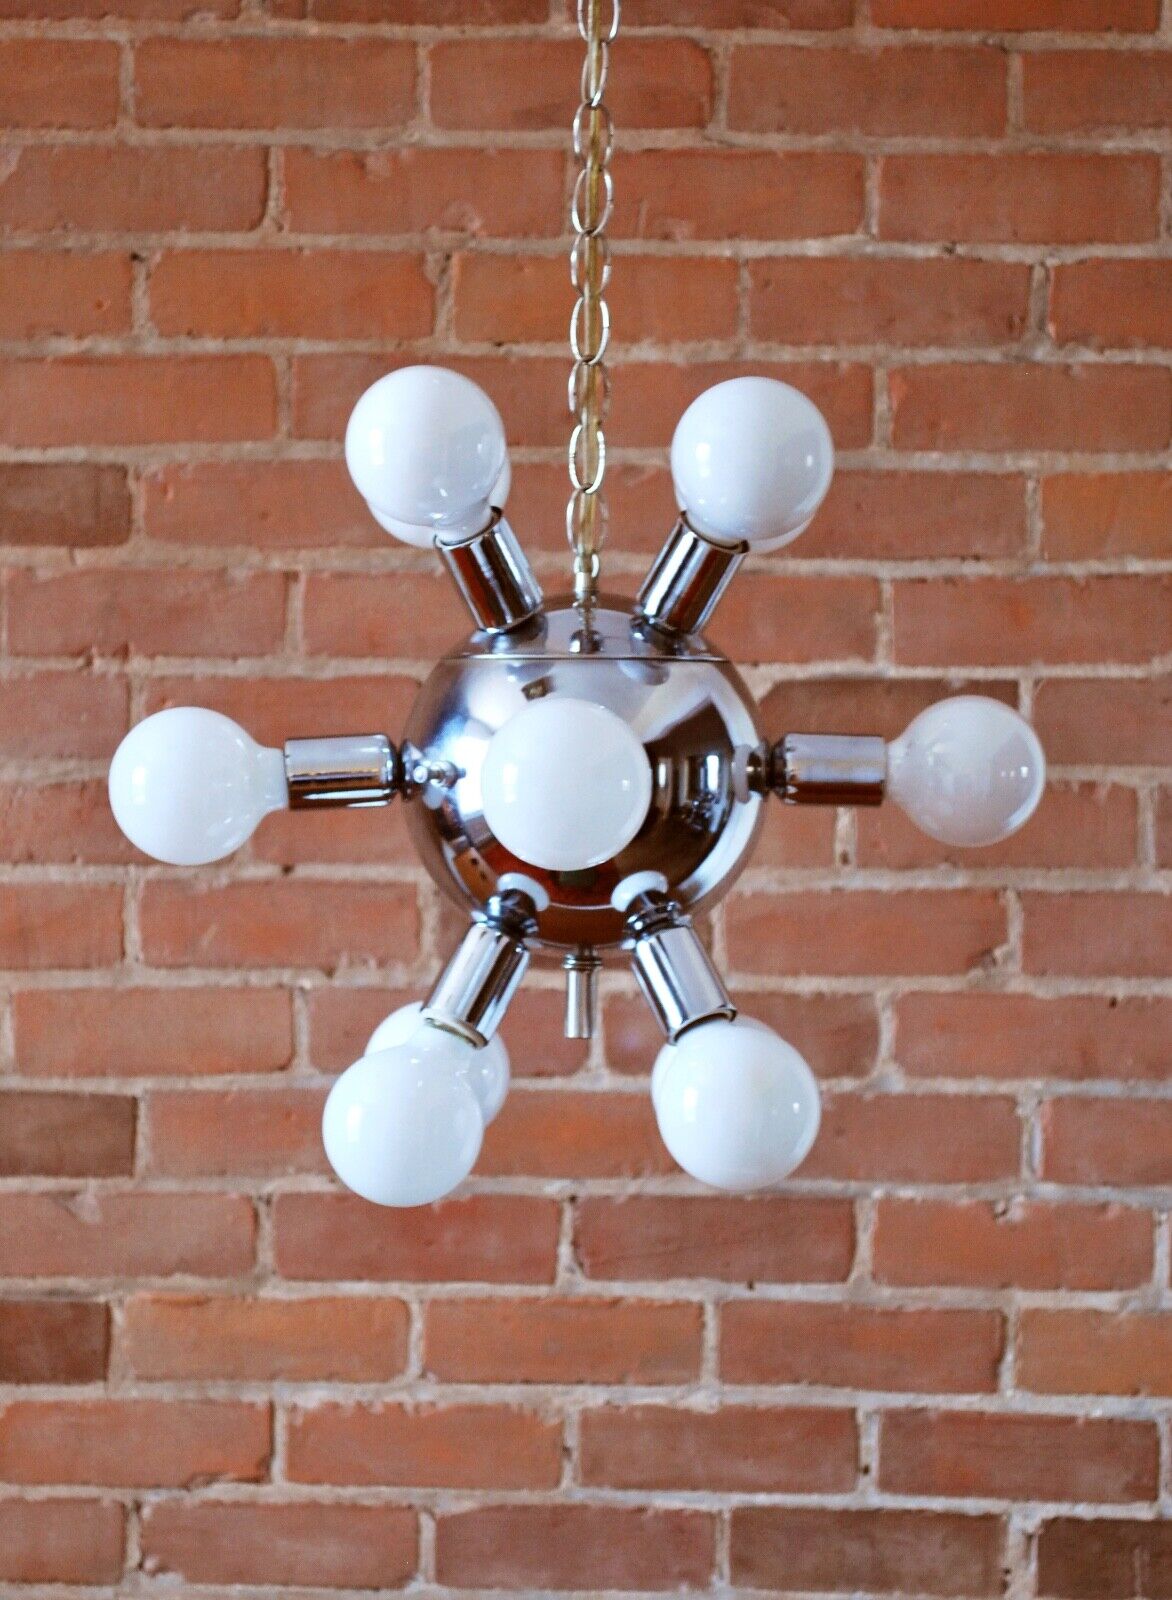 Mid Century Modern Vintage Atomic Mine Sputnik Chrome Hanging Pendant Lamp